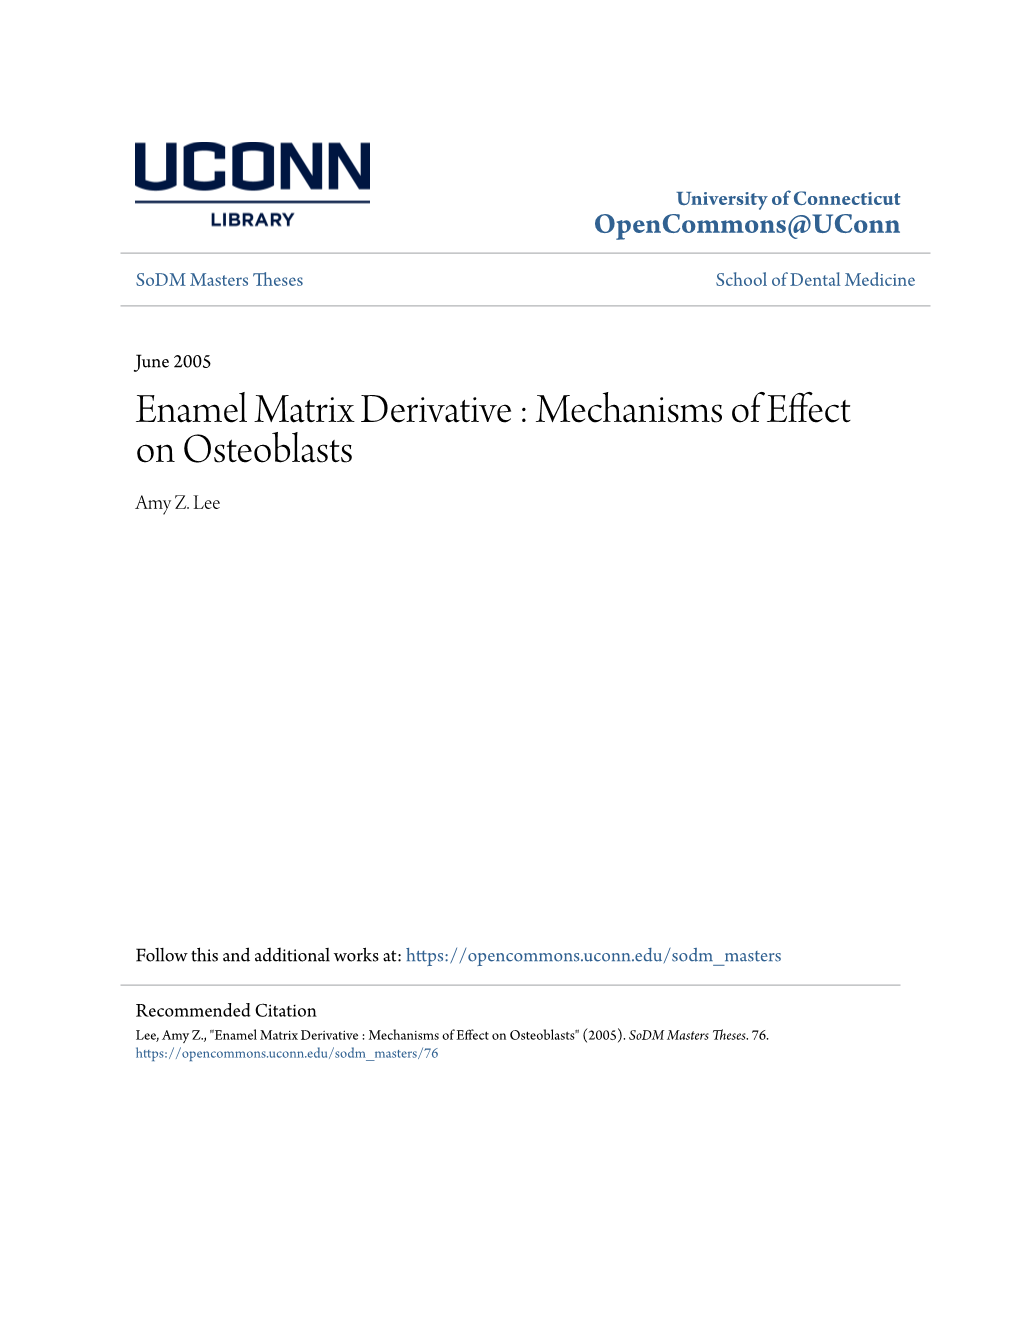 Enamel Matrix Derivative : Mechanisms of Effect on Osteoblasts Amy Z